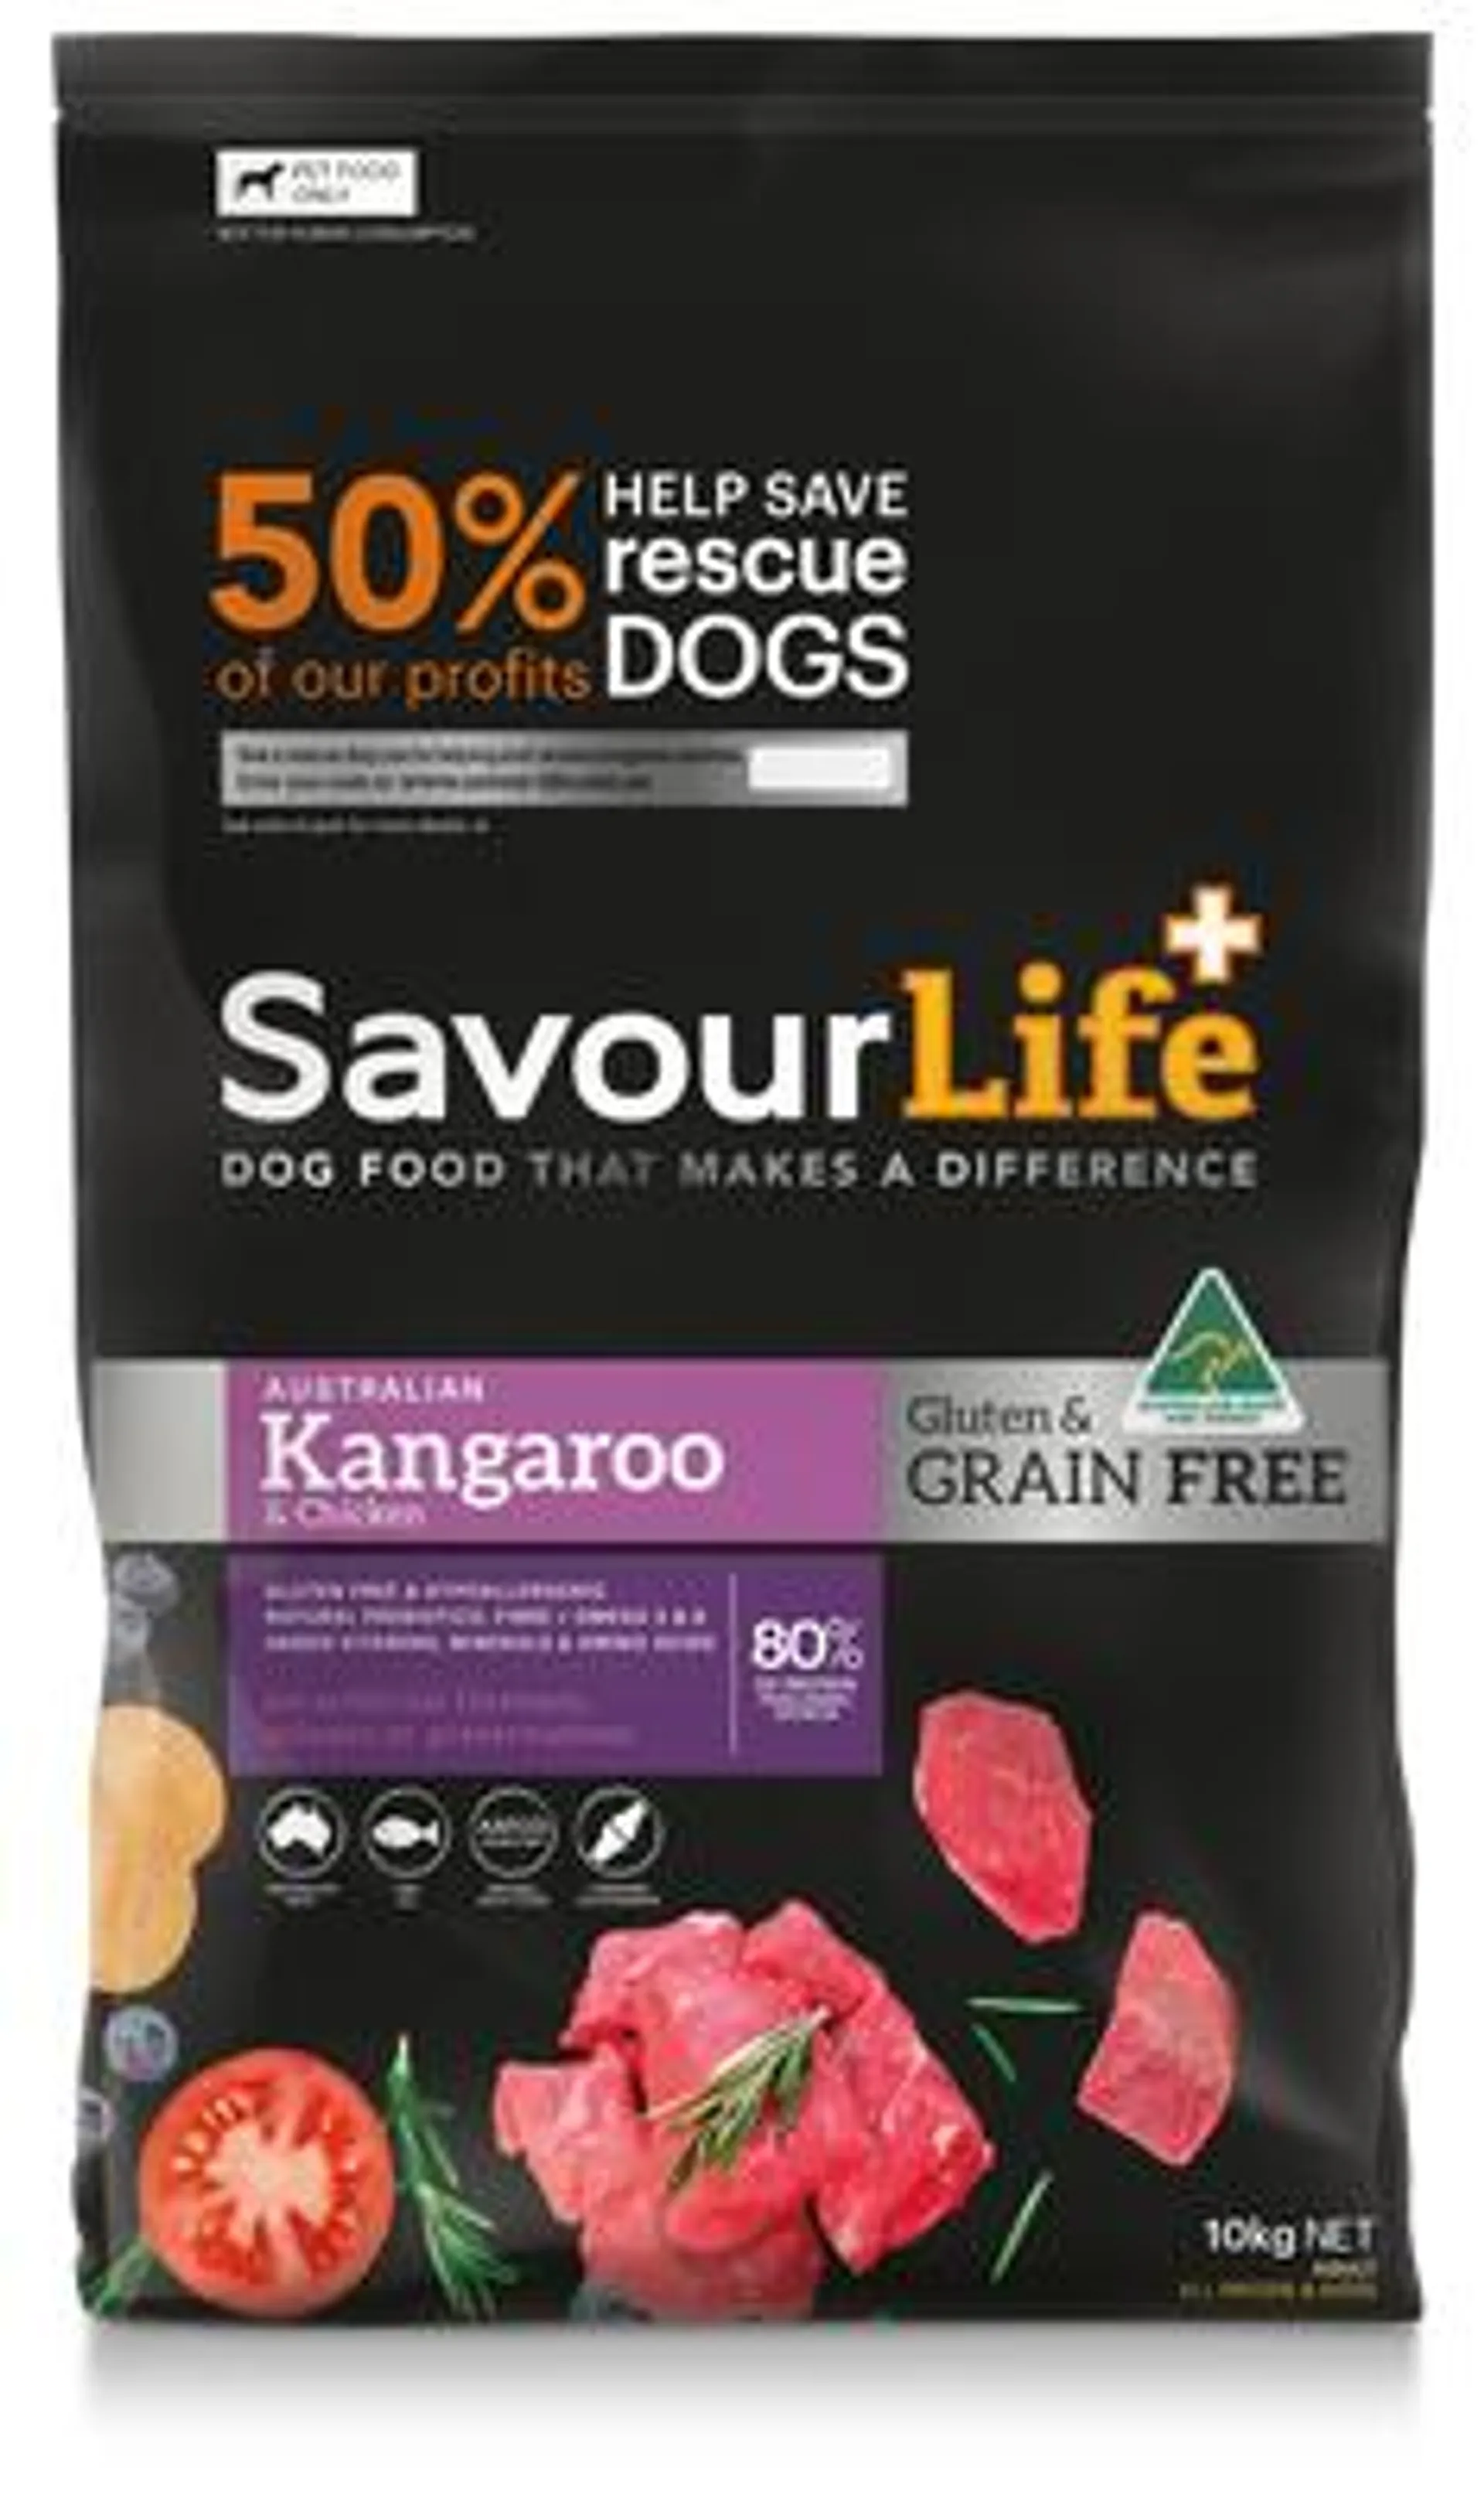 SavourLife Grain Free Australian Kangaroo & Chicken Dog Food